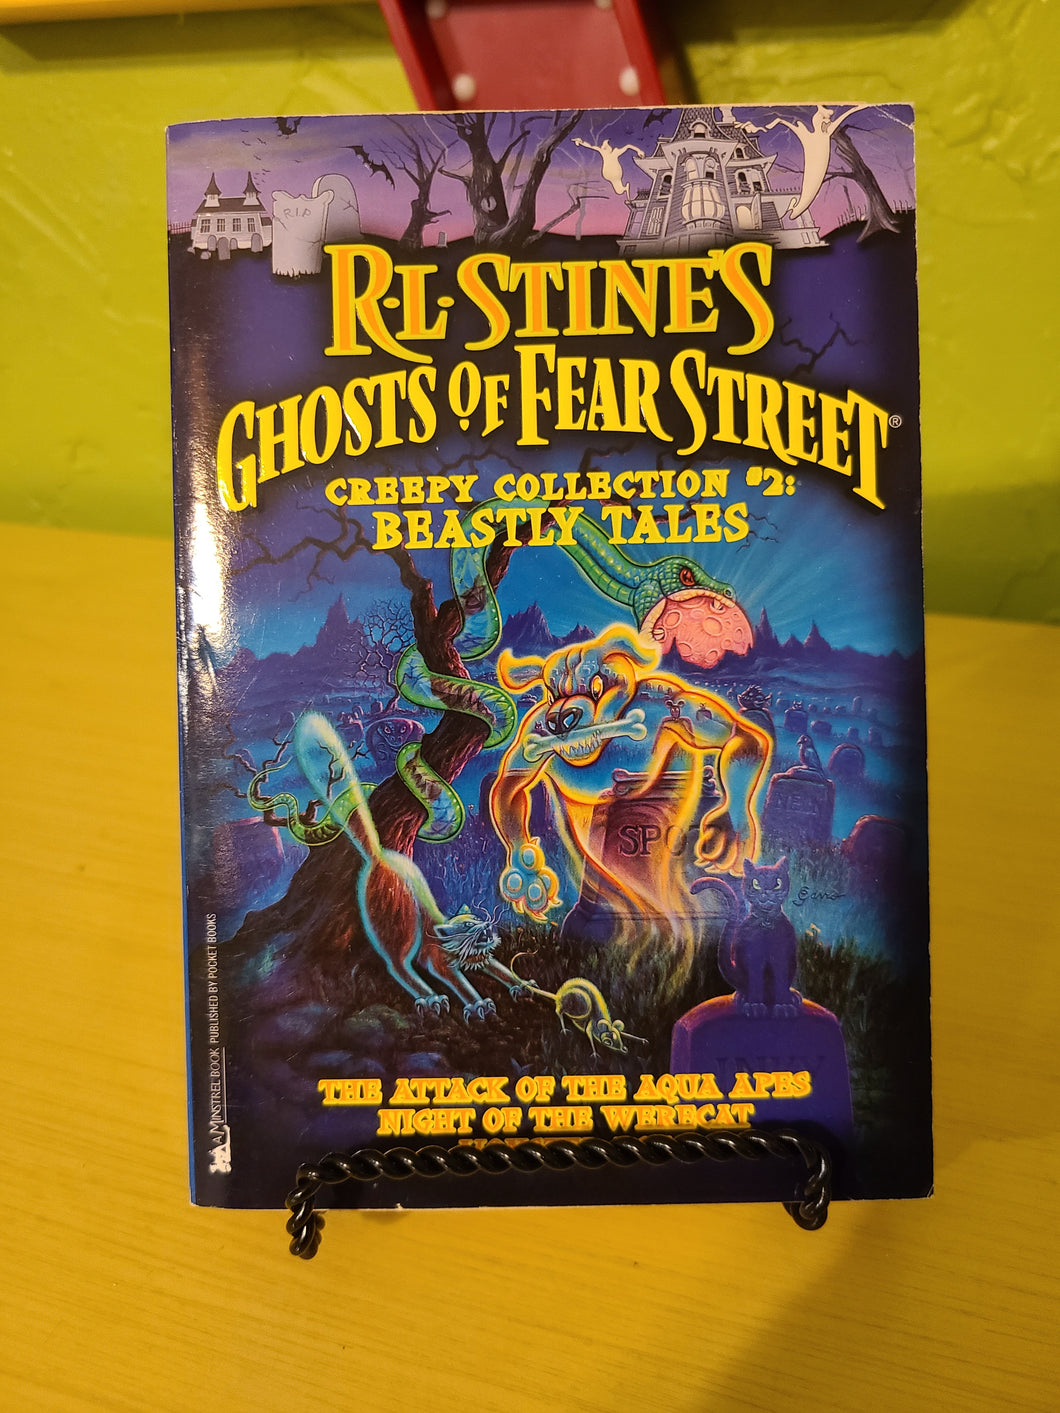 R.L. Stine's Ghosts of Fear Street #2